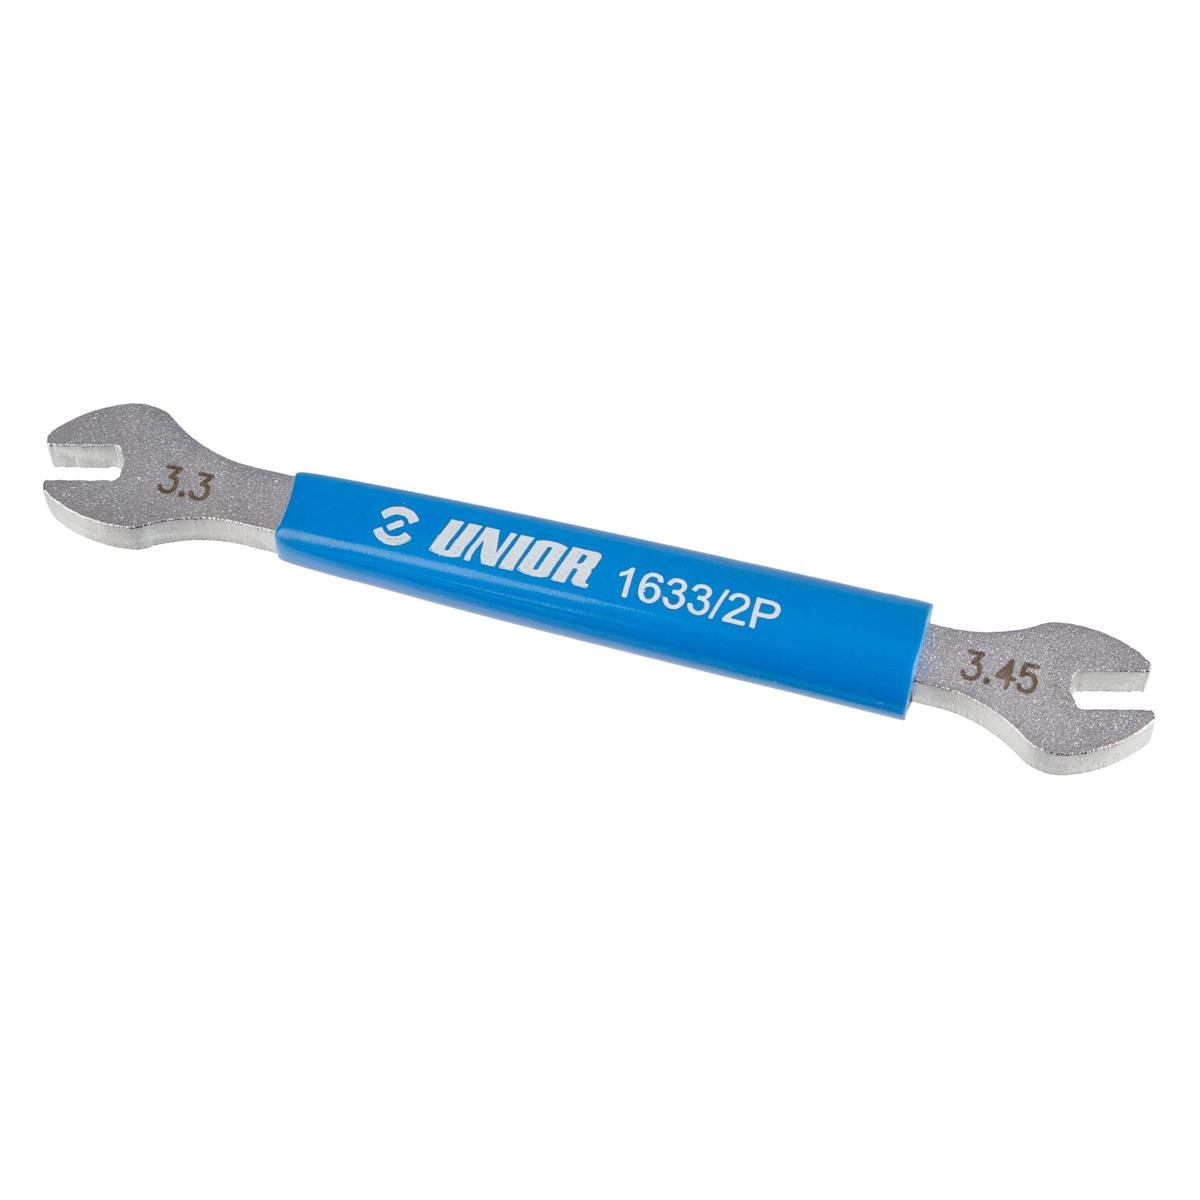 Unior Single Handle Spoke Wrench